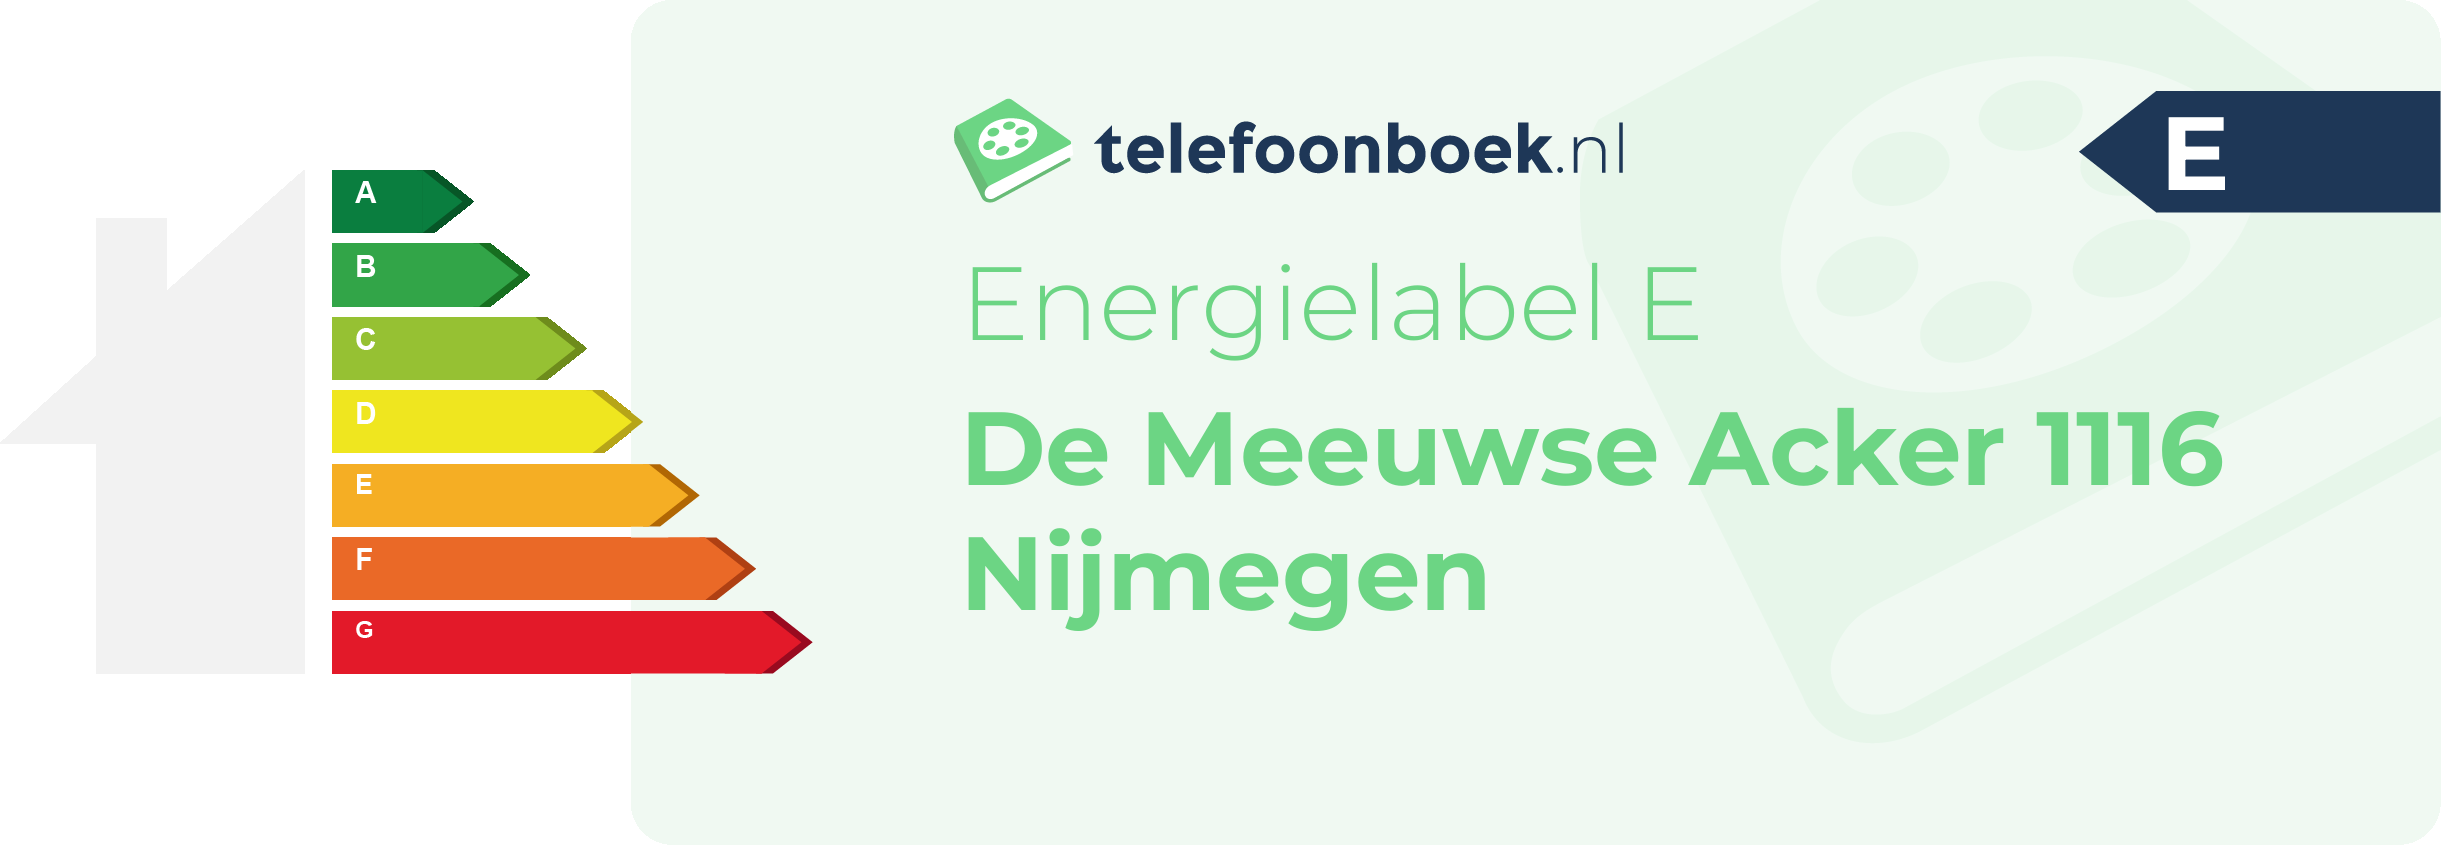 Energielabel De Meeuwse Acker 1116 Nijmegen